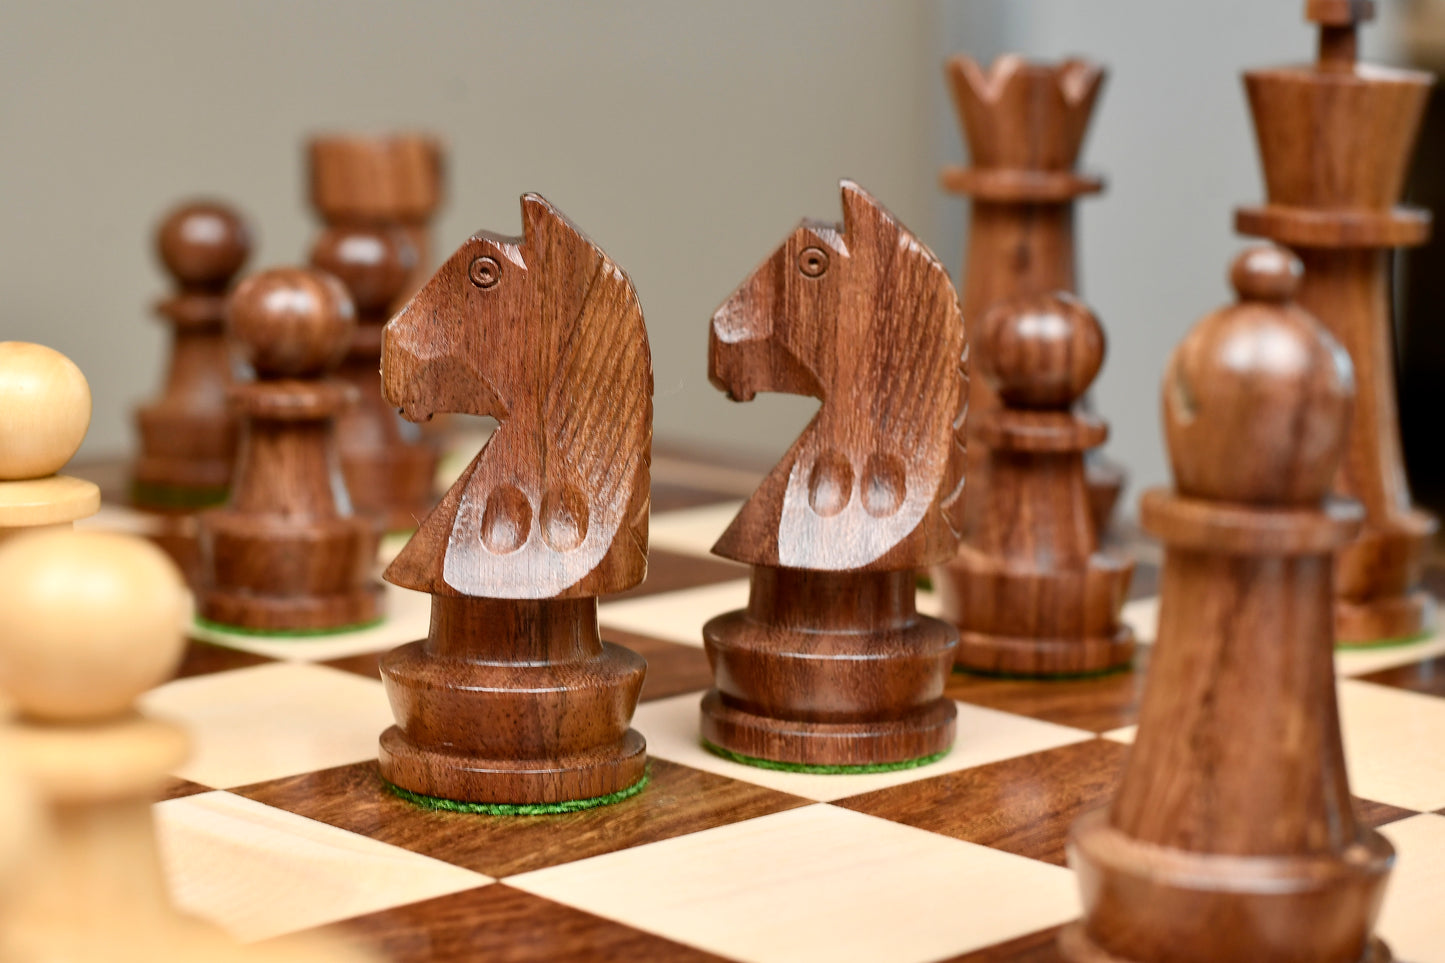 The Championship Series Staunton Chess Pieces in Sheesham Wood & Boxwood - 3.75" King